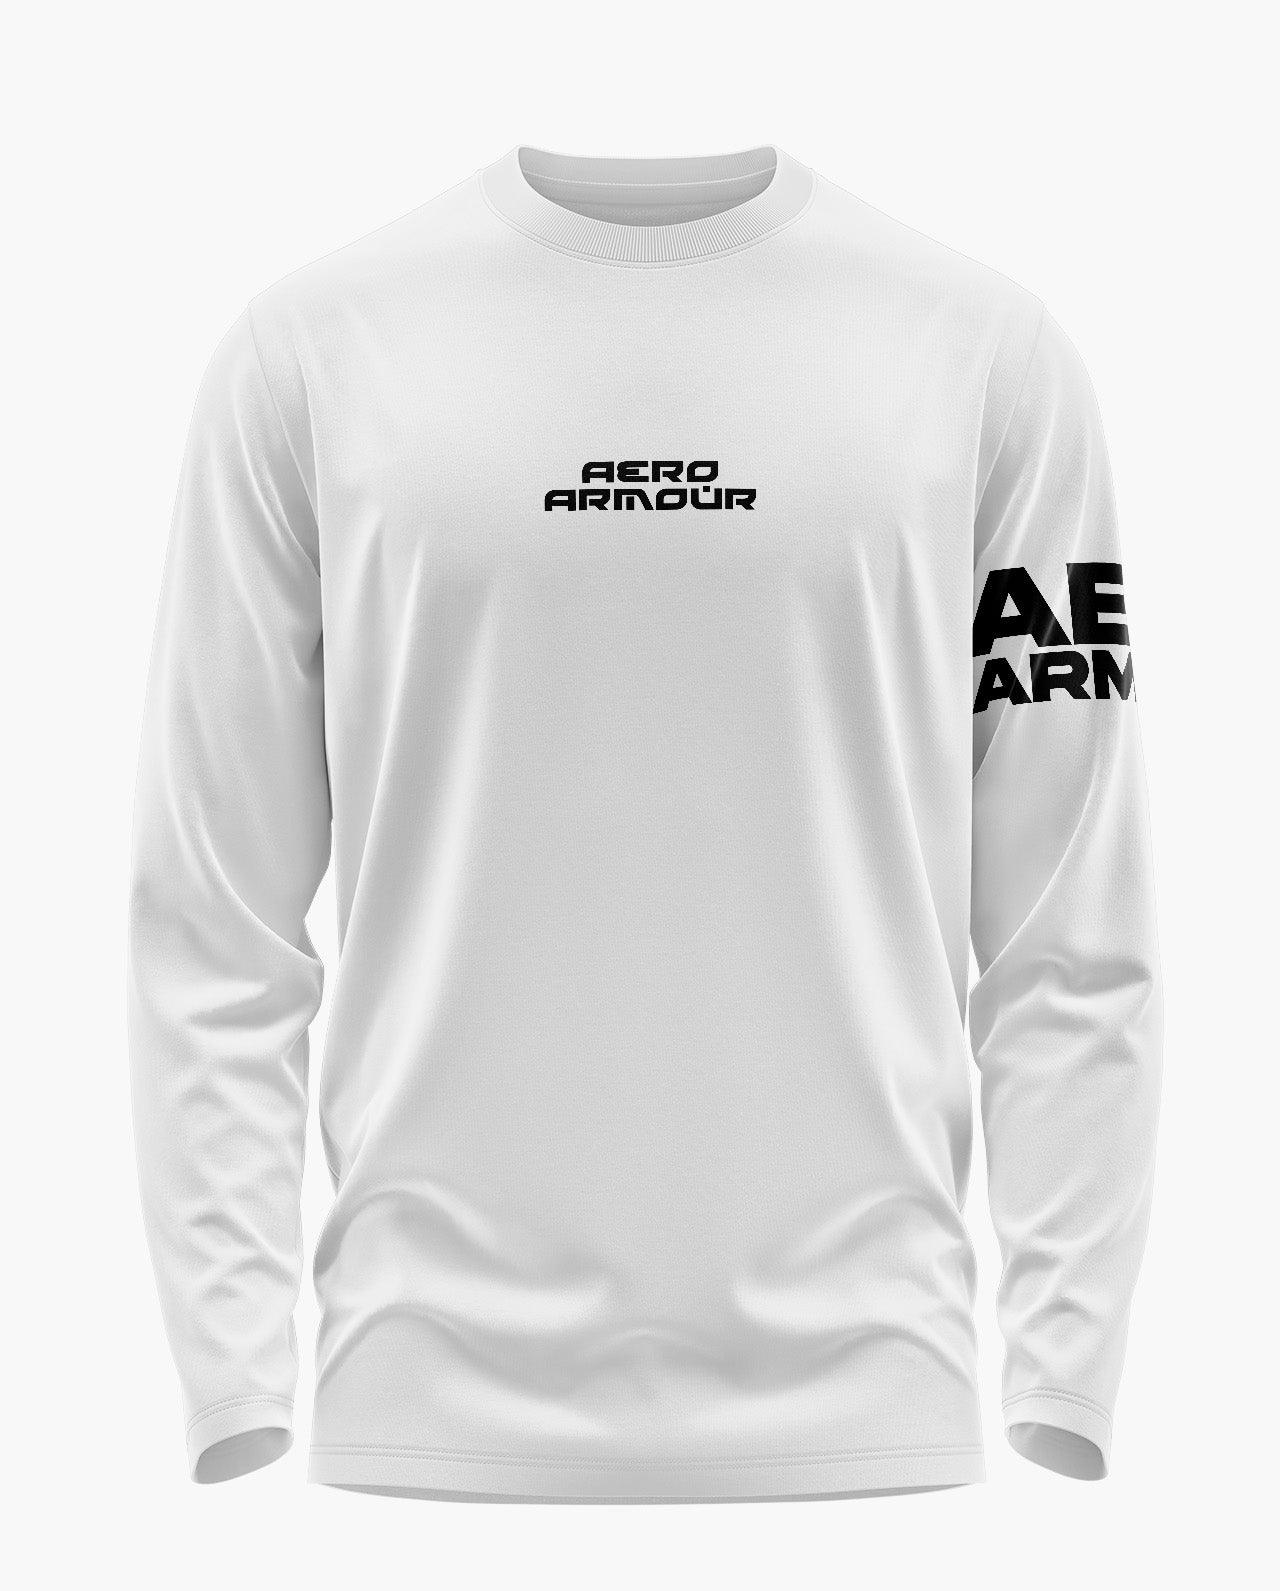 Aero Sleeve Full Sleeve T-Shirt - Aero Armour